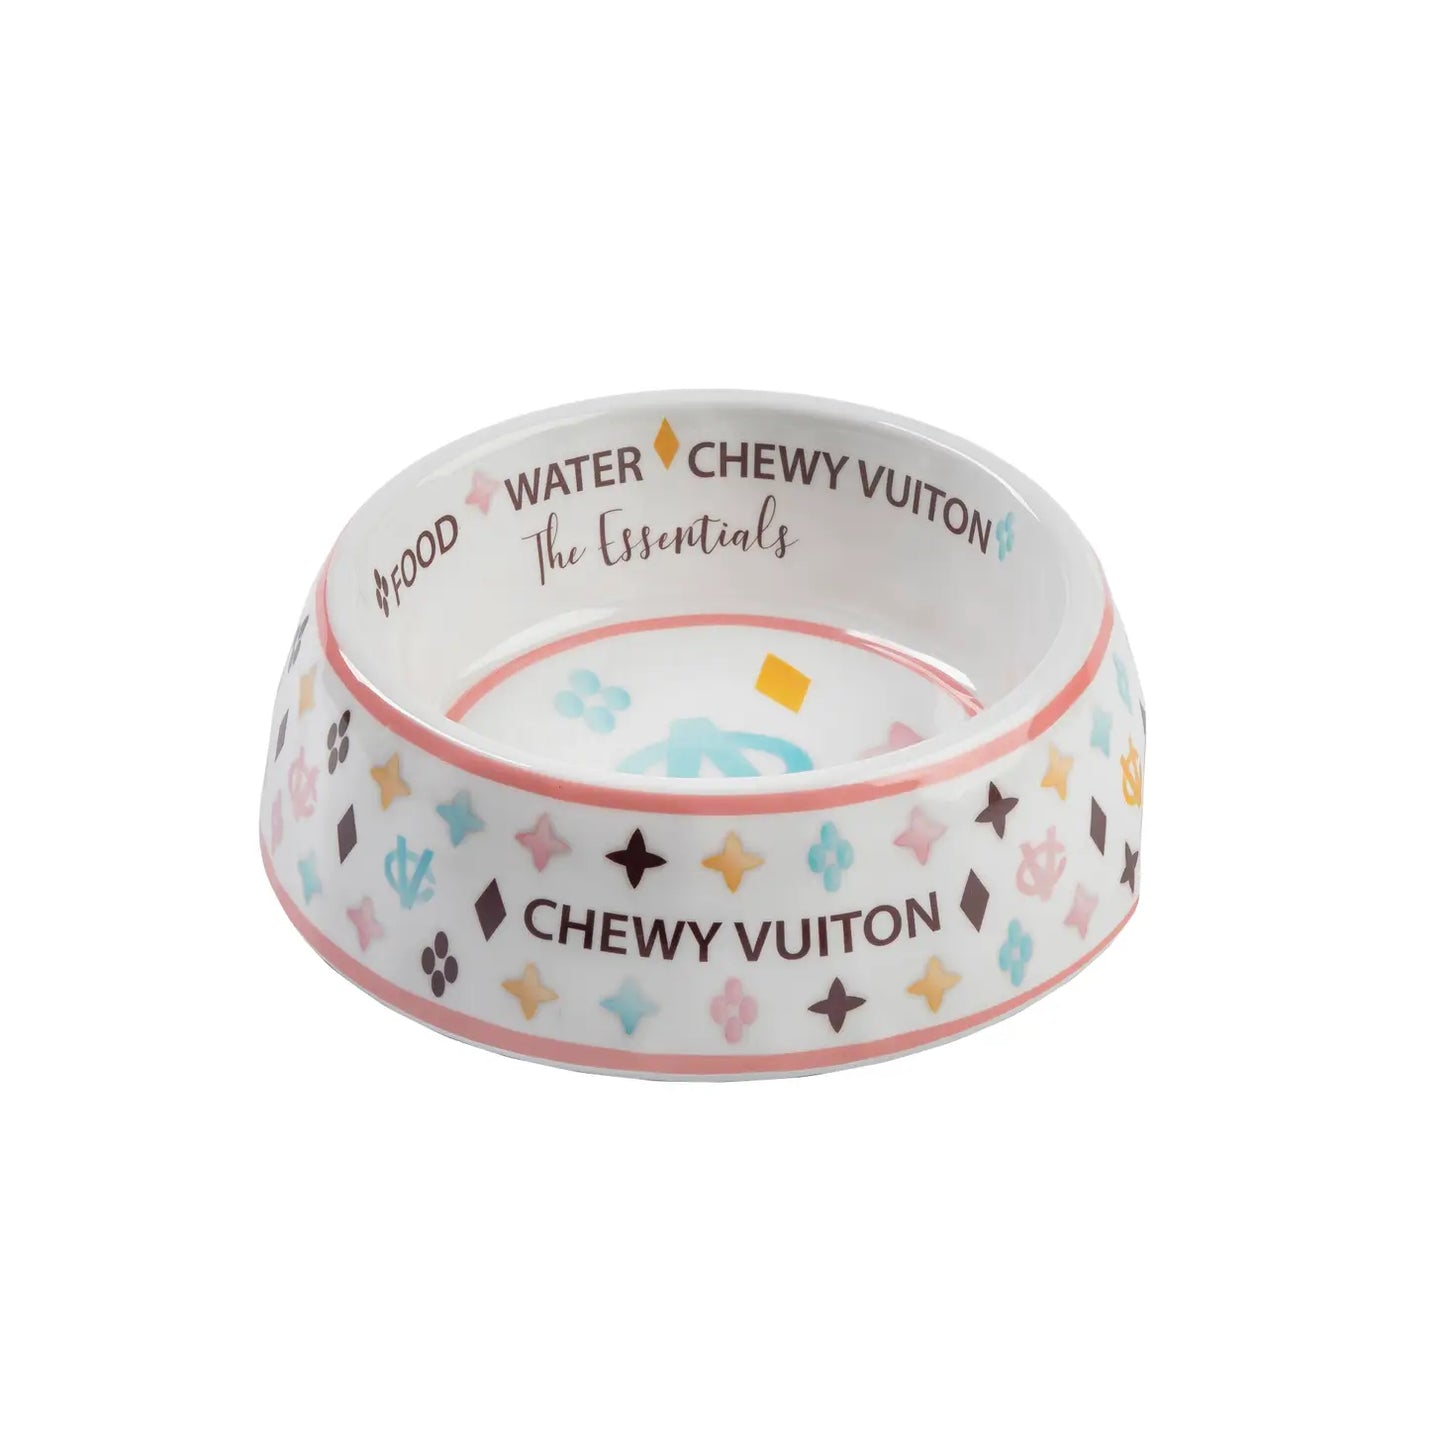 White Chewy Vuiton Bowl - 3 Sizes!! Dog Bowls